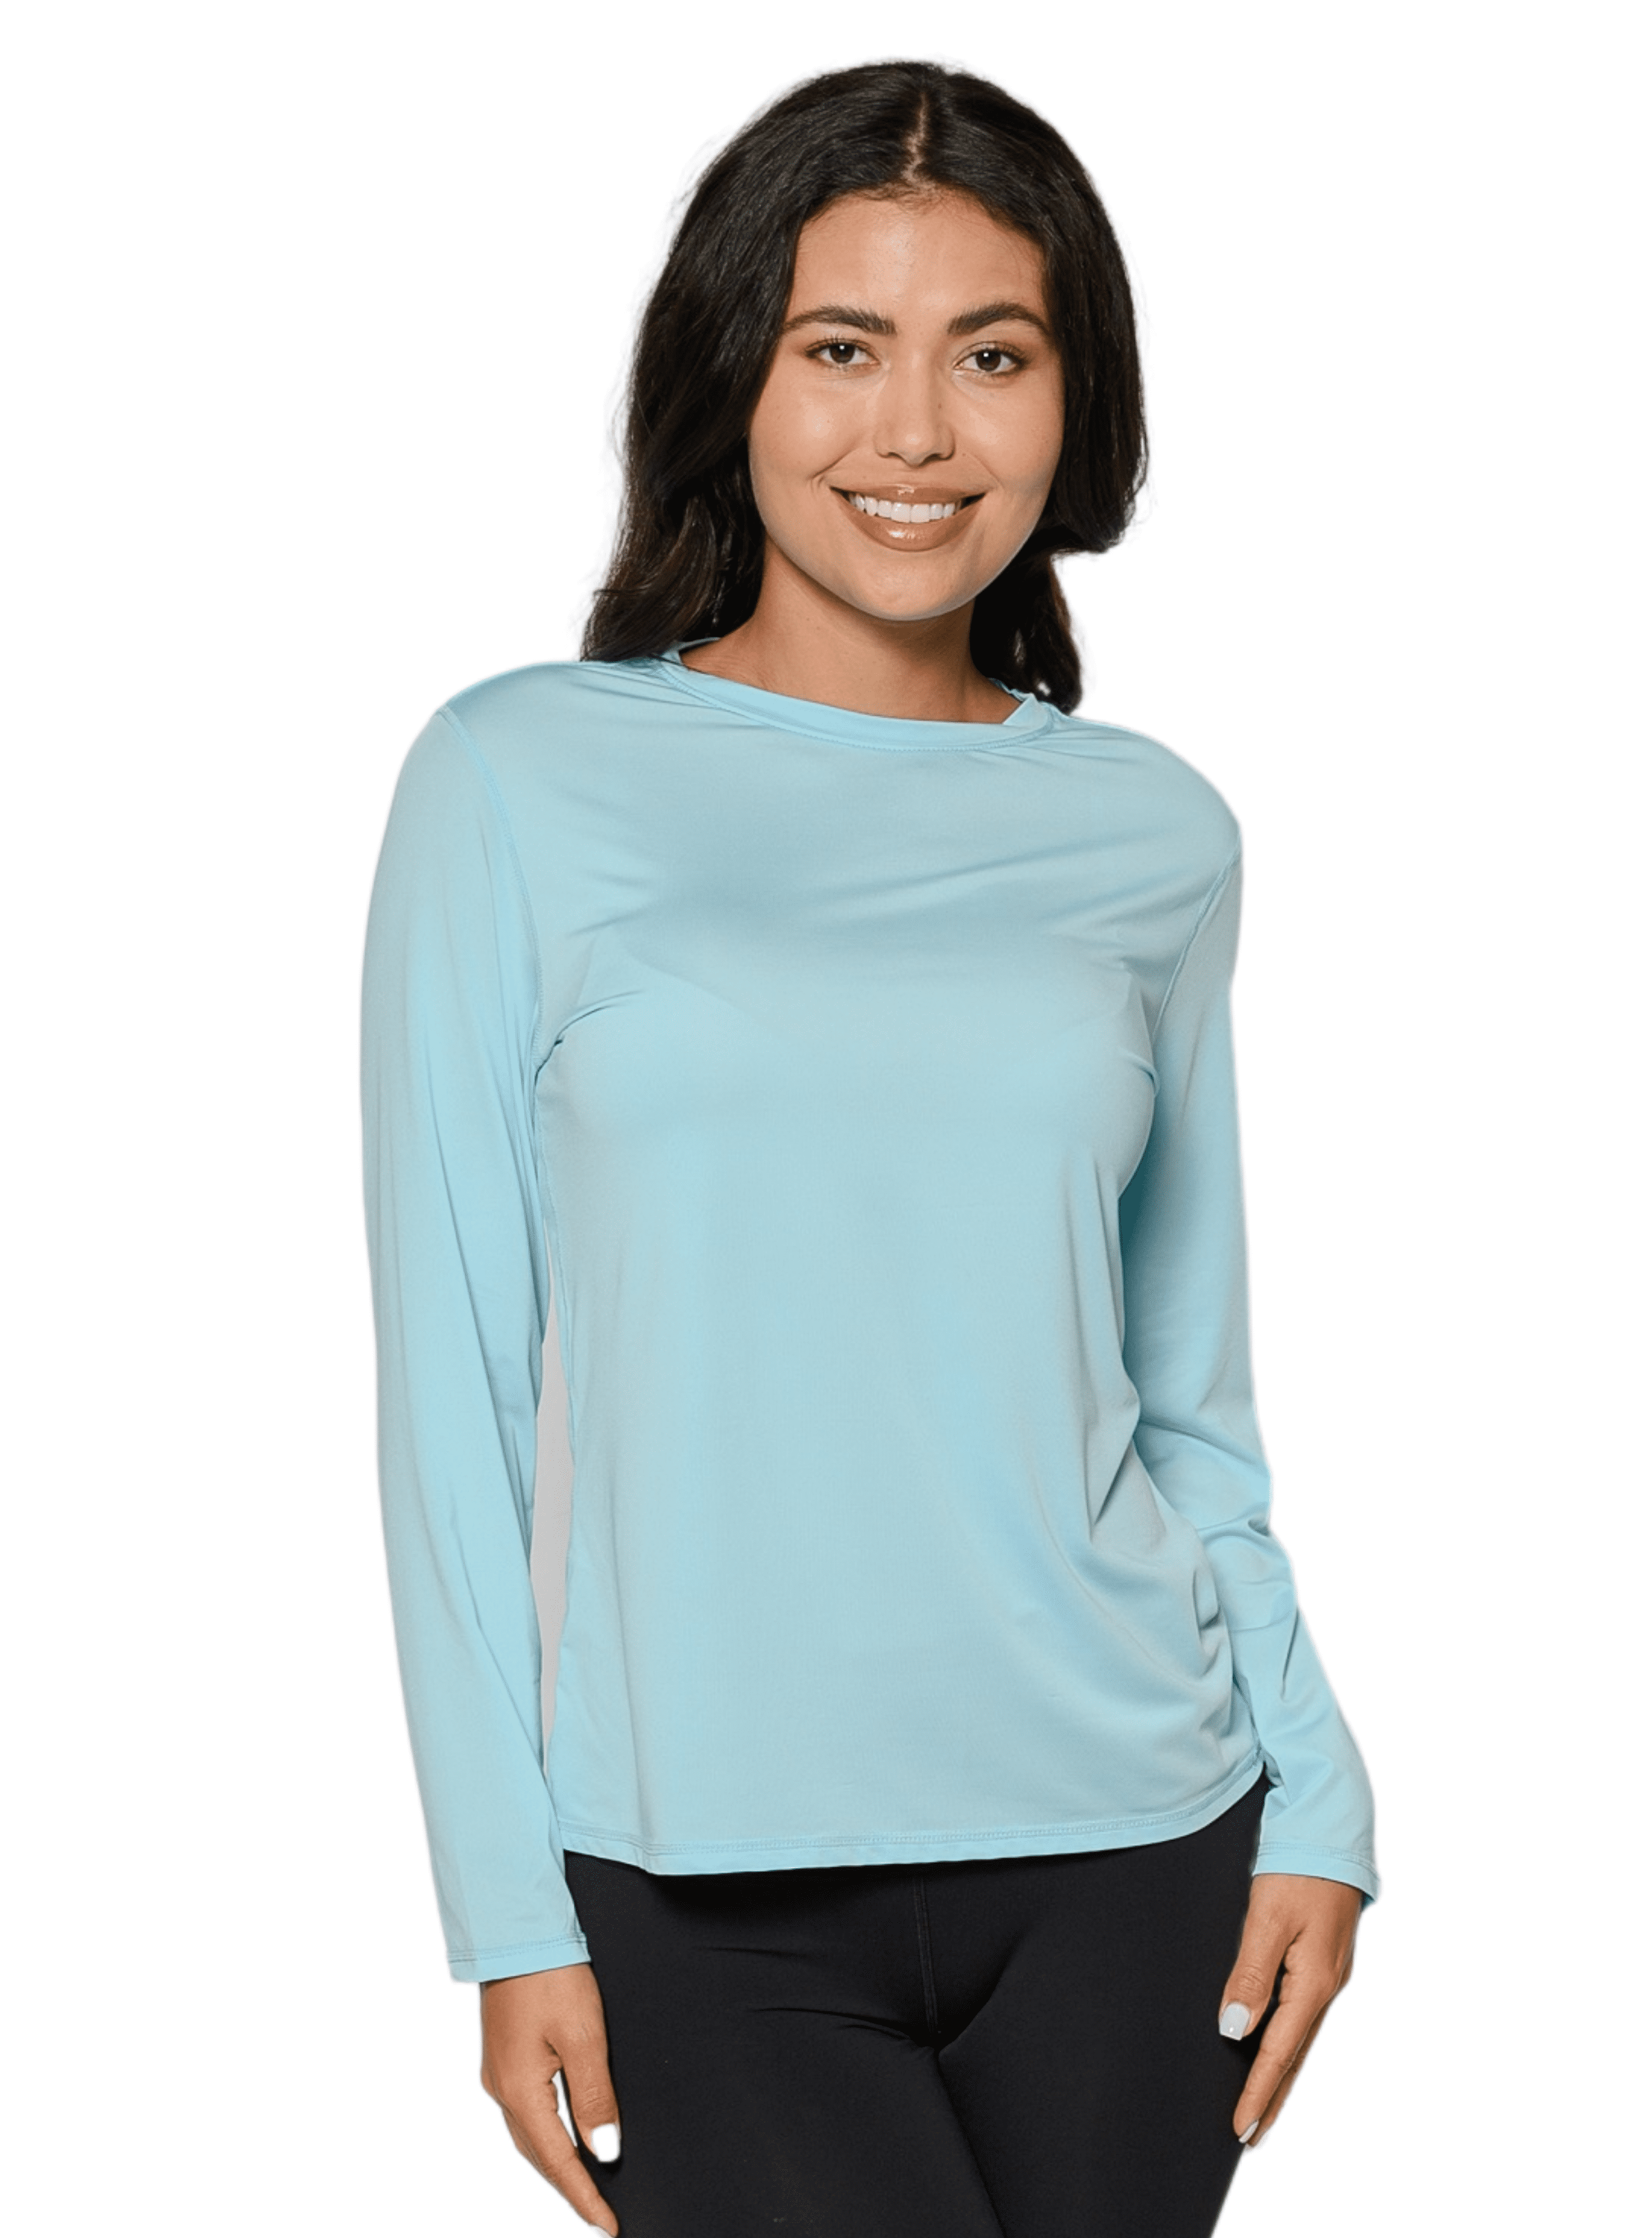 KEFITEVD Quick Dry Women's UPF 50+ Long Sleeve T-Shirts Skin Sun/UV  Protection Swim Outdoor Hiking Shirts Tops Girls Ladies